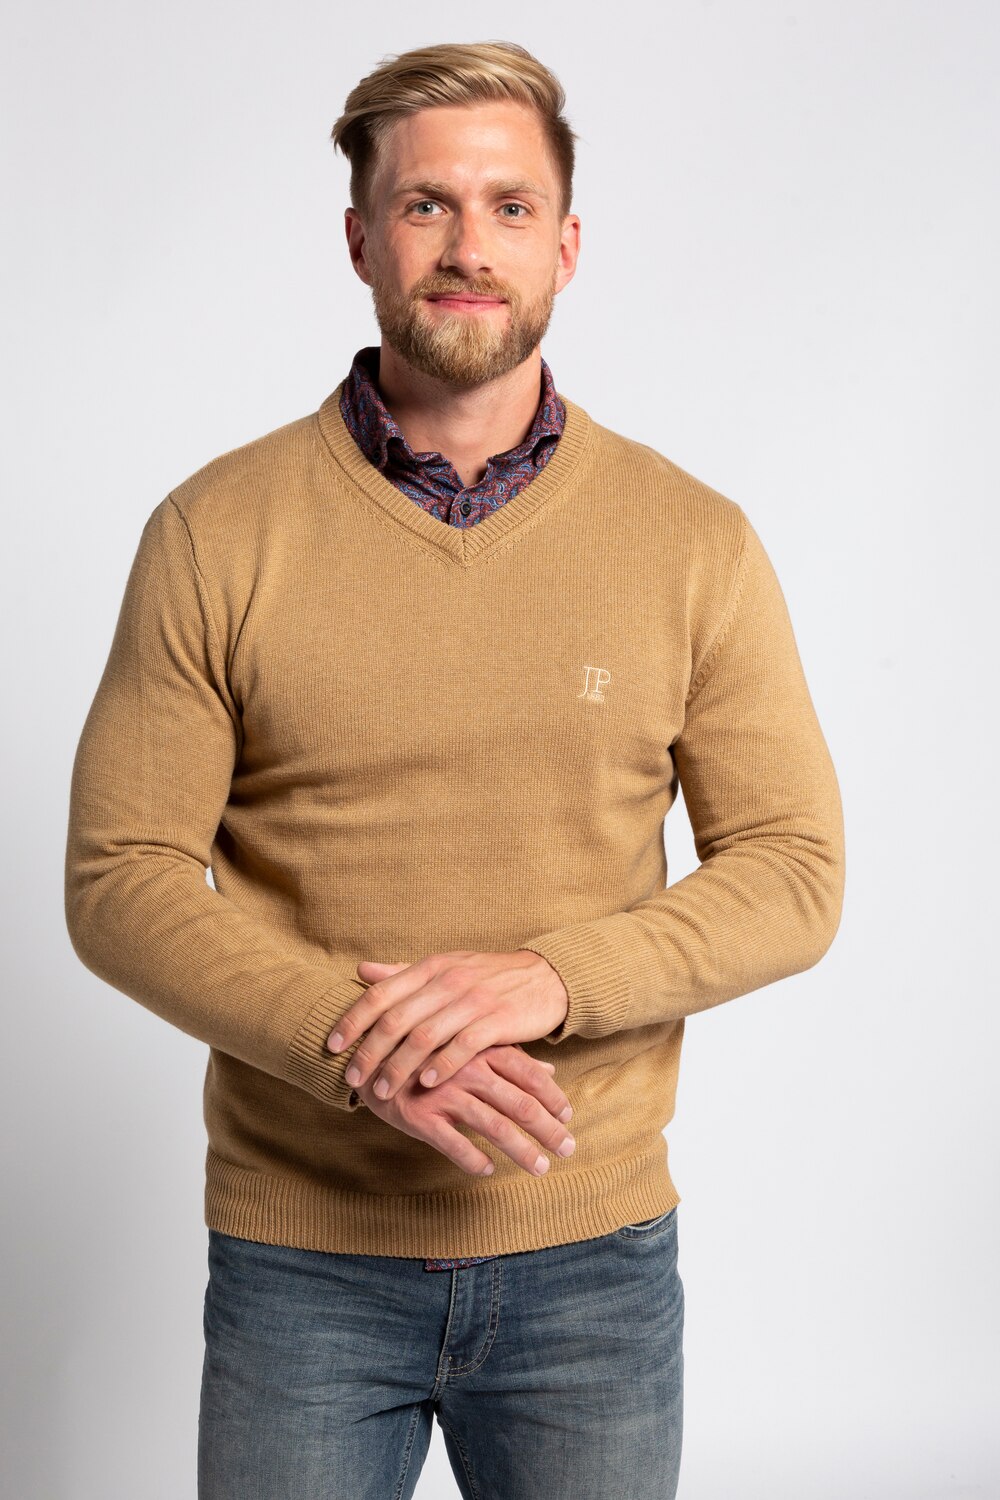 Plus Size Fine Knit V-neck Sweater, Man, beige, size: XXL, cotton, JP1880